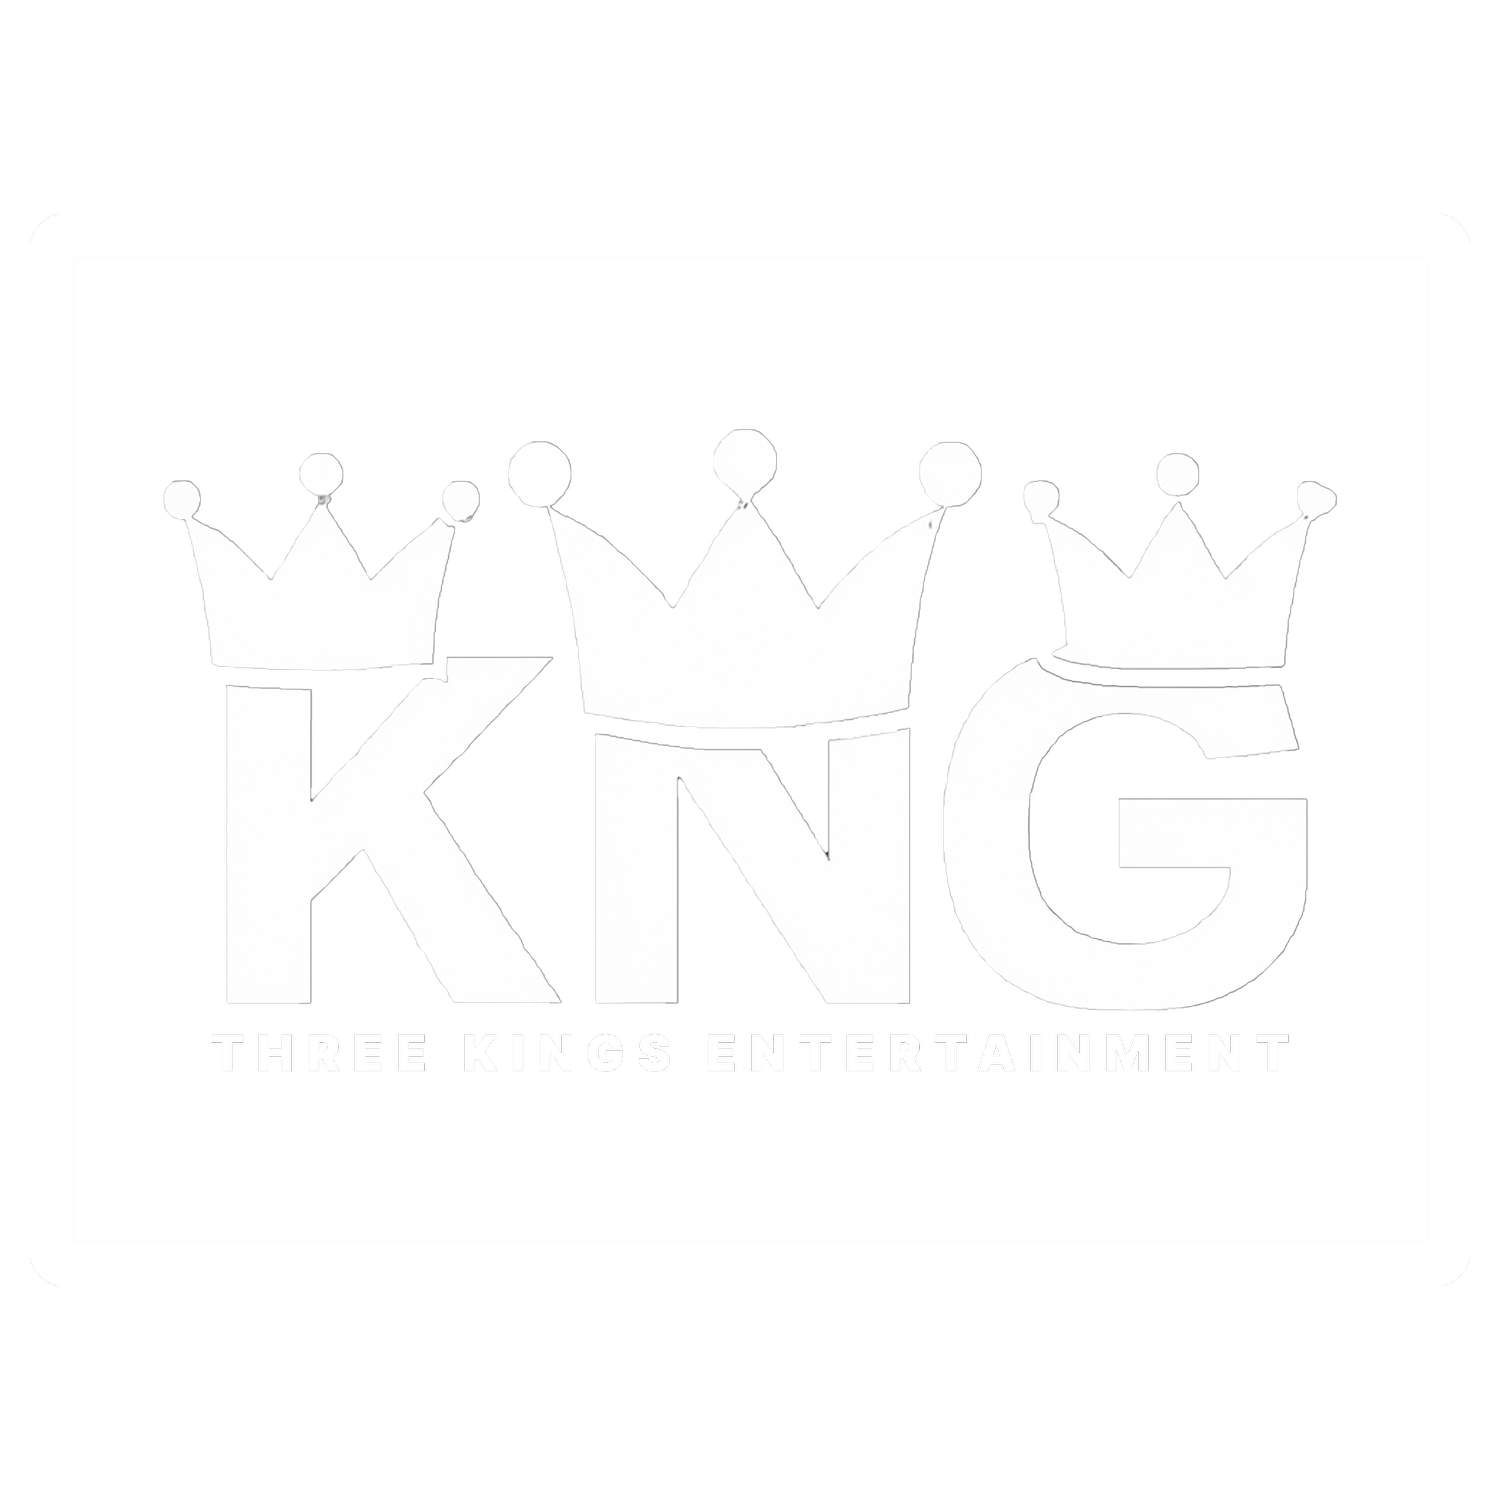 Three Kings Entertainment